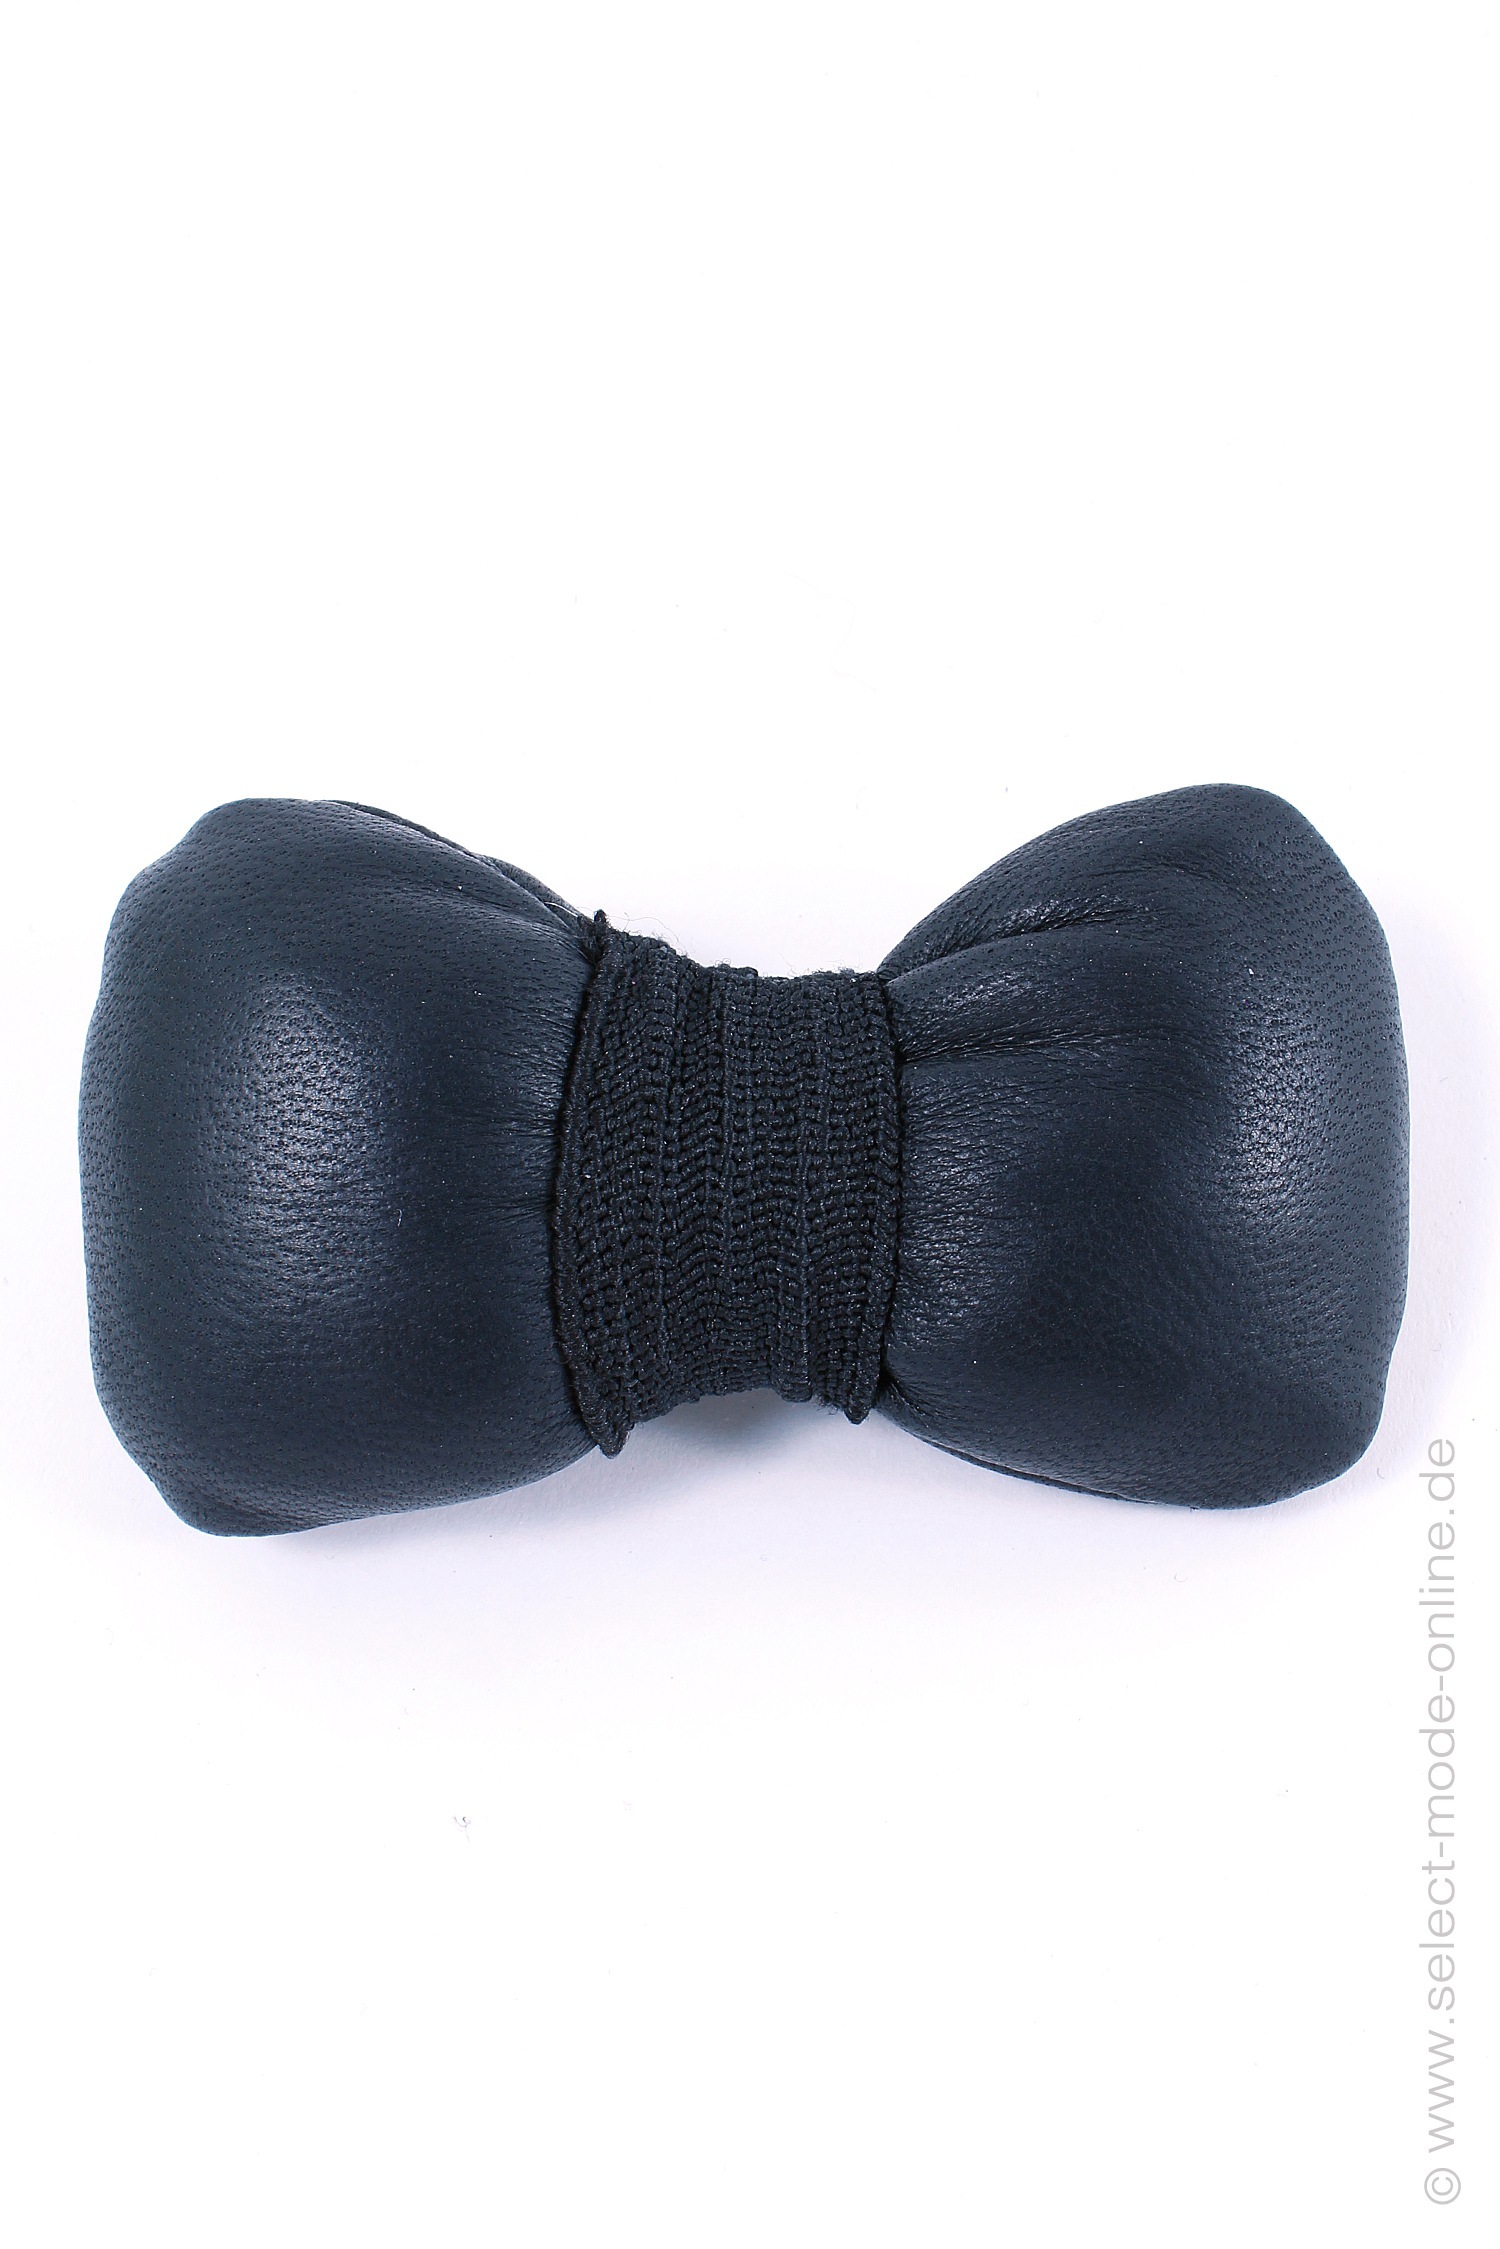 Leather bow tie bracelet - black